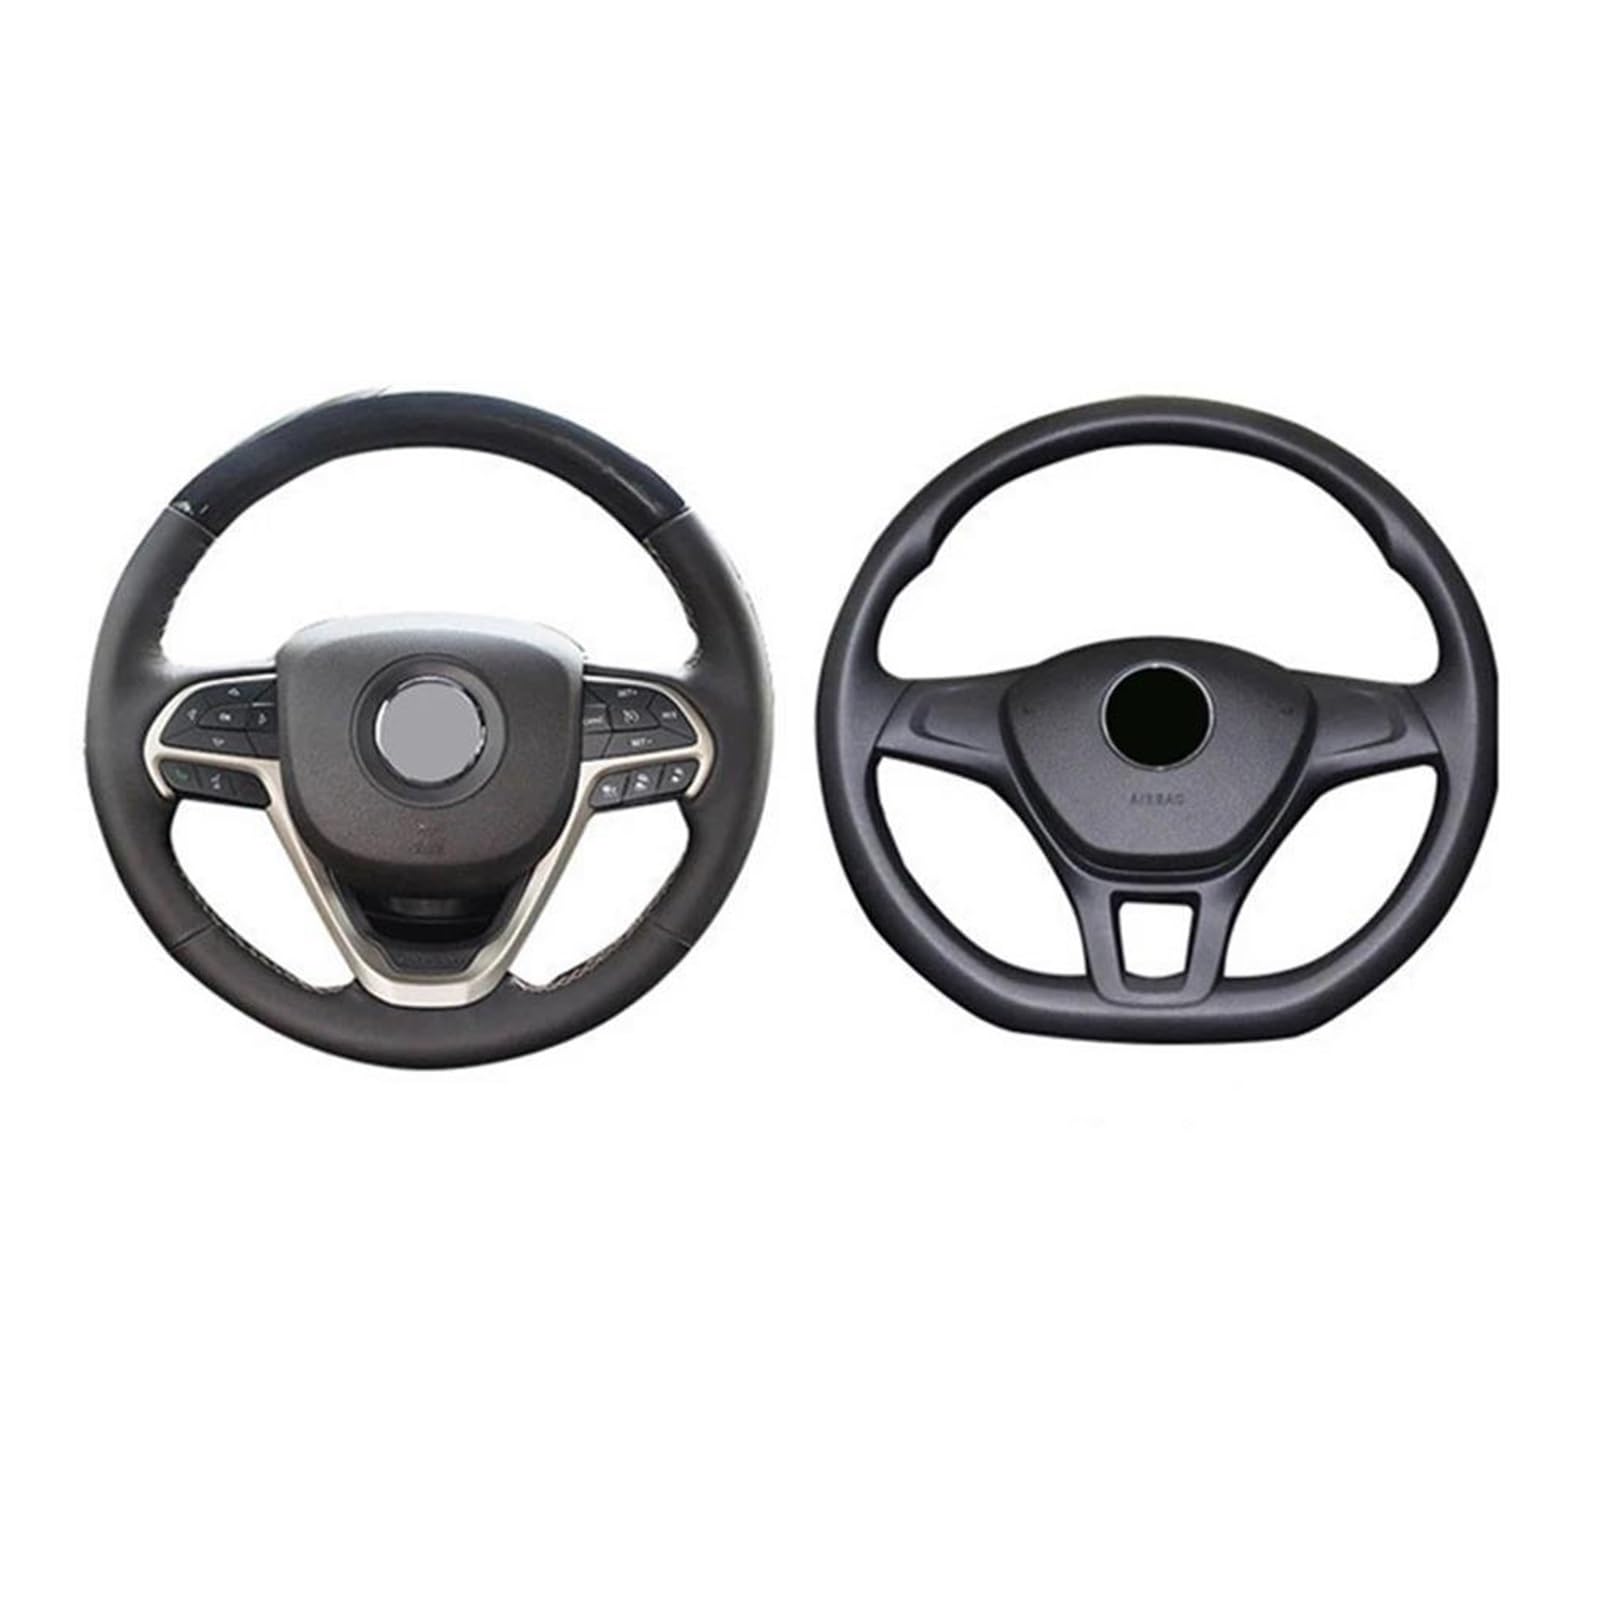 Steering Wheel Cover Für E46 E90 E60 F10 F30 E39 E36 F20 E92 E87 E70 E30 E46 E91 Anti Slip Staubdicht Atmungsaktive Leder Auto Lenkrad Abdeckung Lenkradabdeckung(Blue) von CRUBVQQ